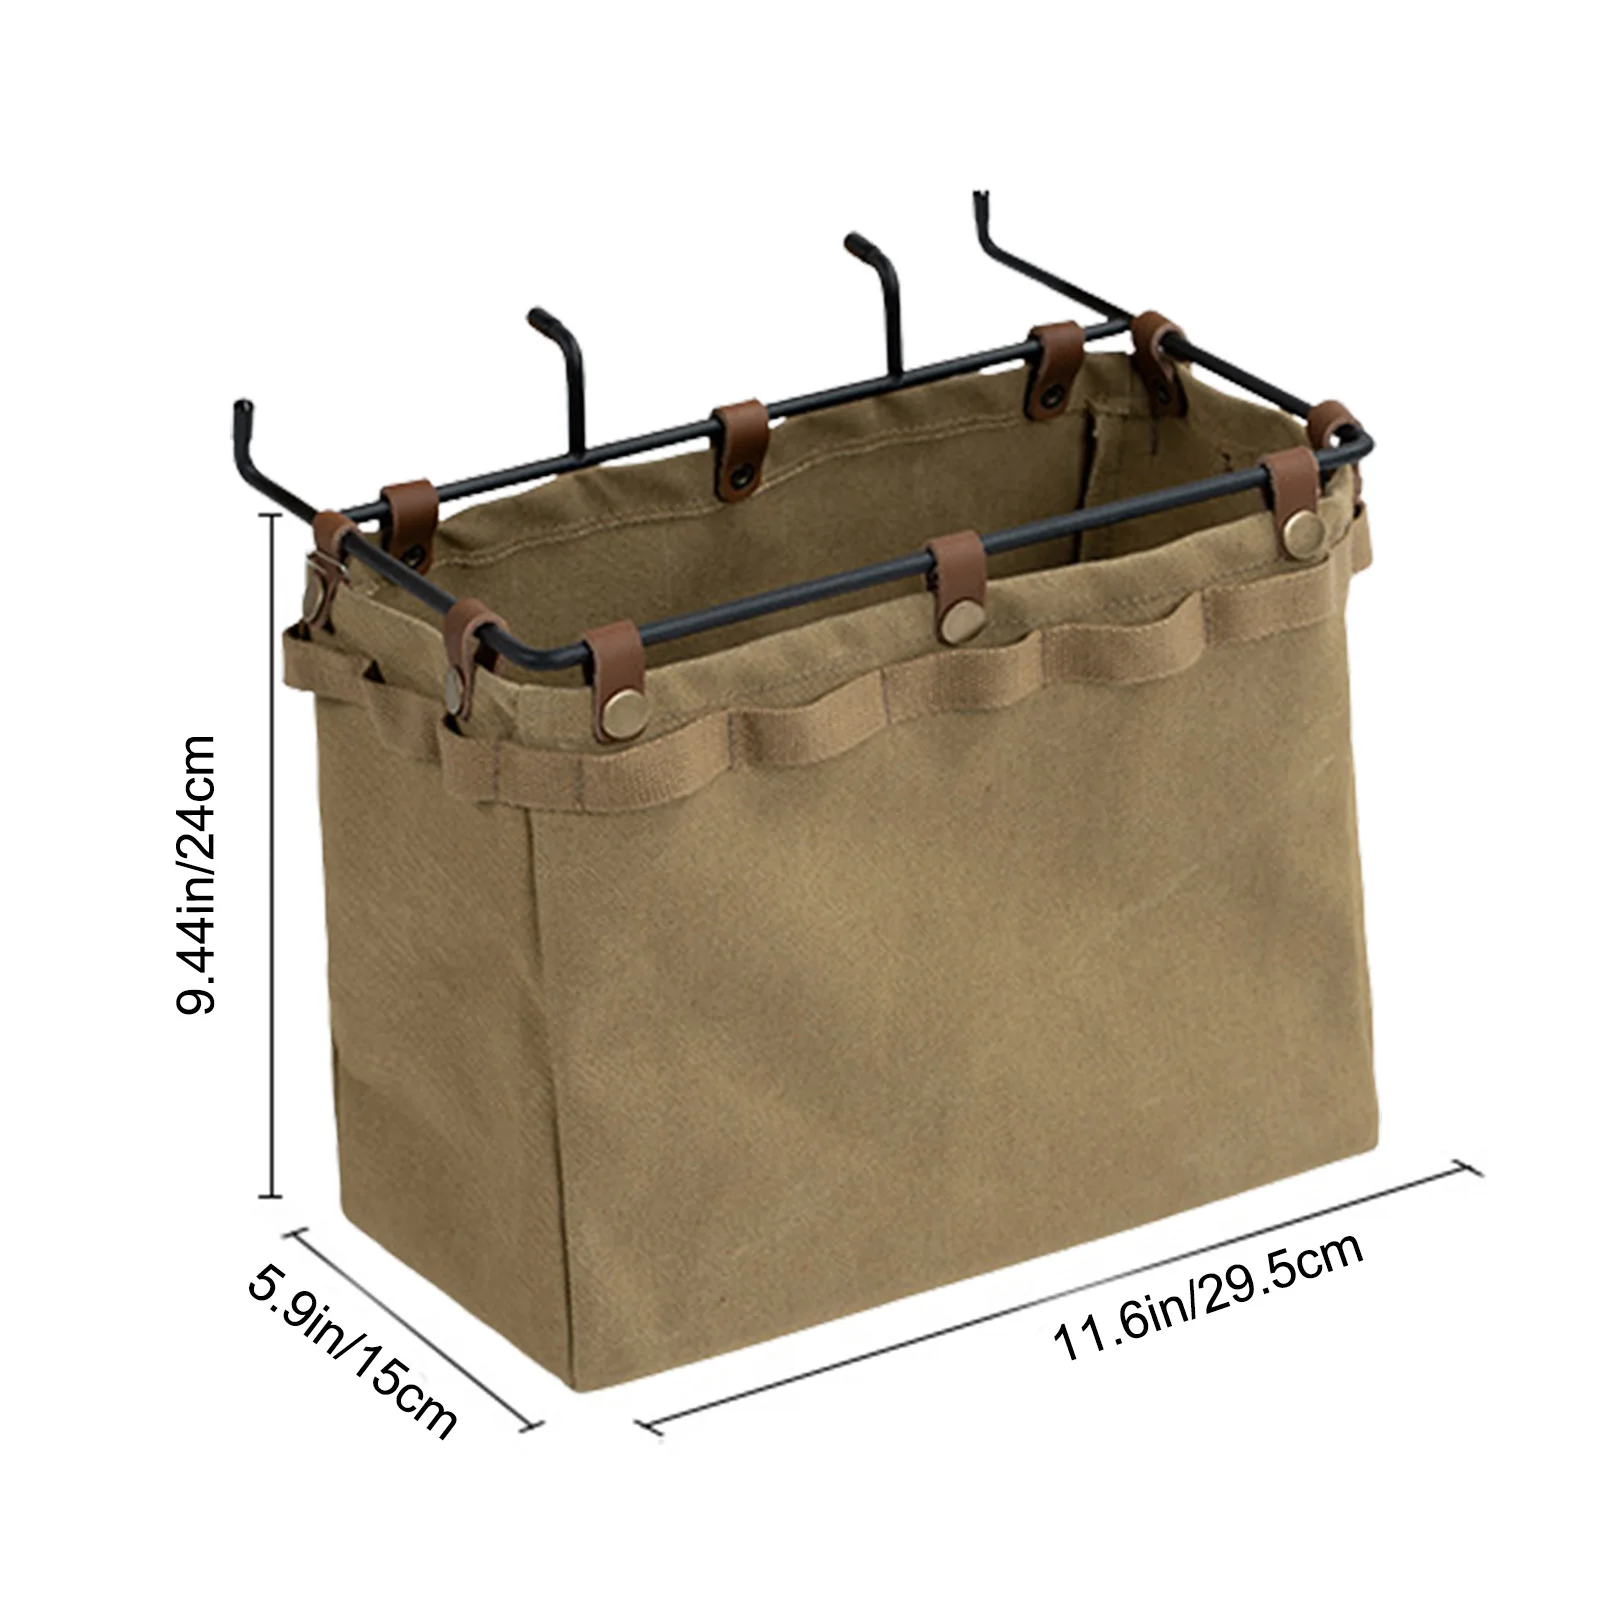 Desk Side Storage Bag Bedside Storage Caddy Hangings Organizer For Table Foldable Storage Bag For Travel Or Daily Use images - 6